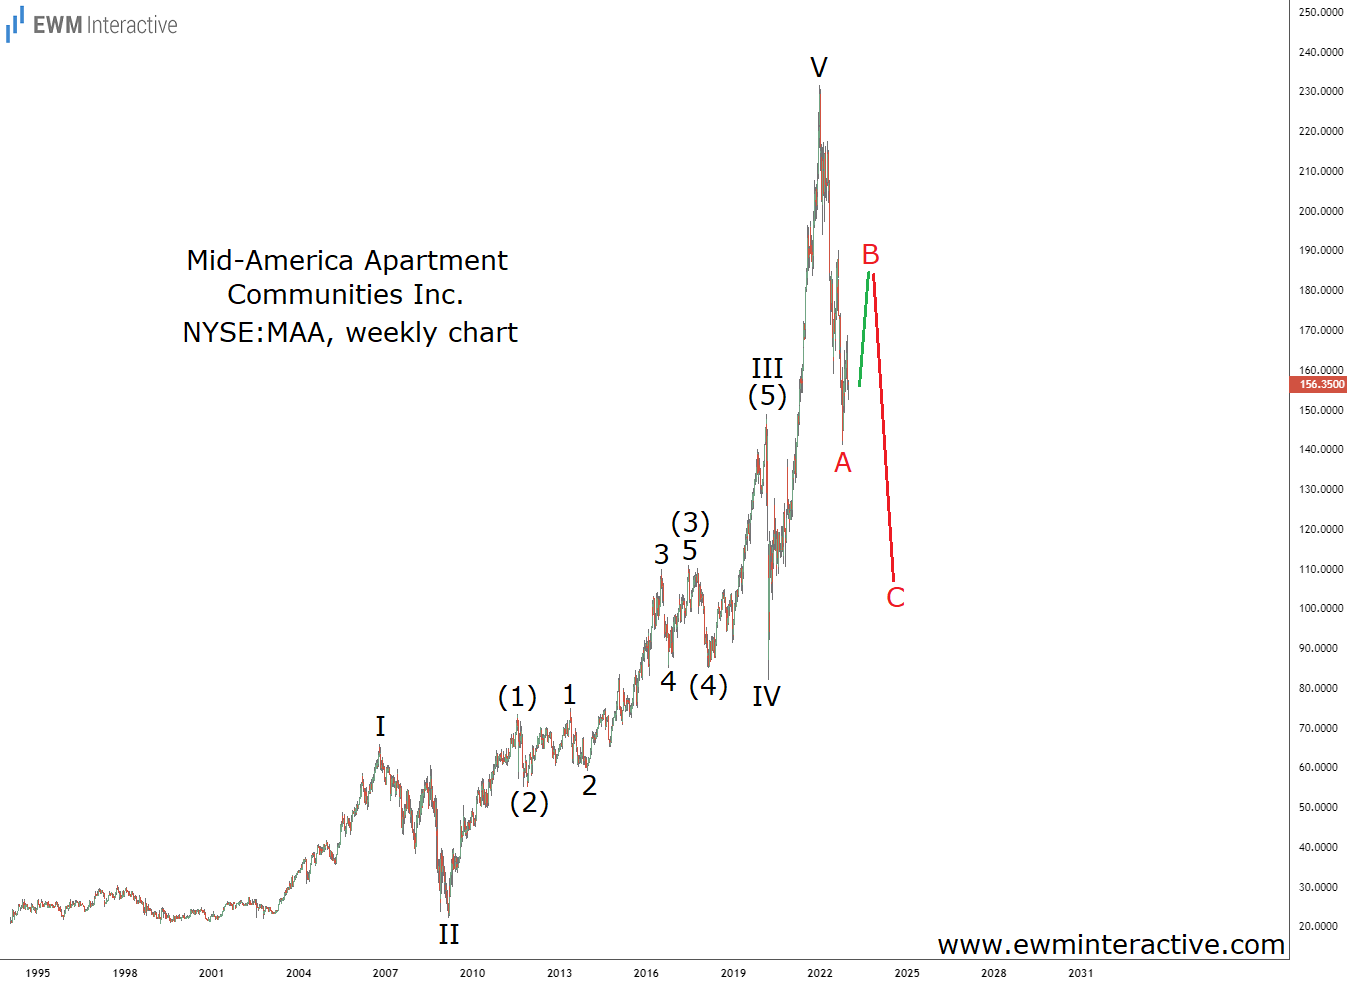 Mid-America Apartment stock Elliott Wave Analysis